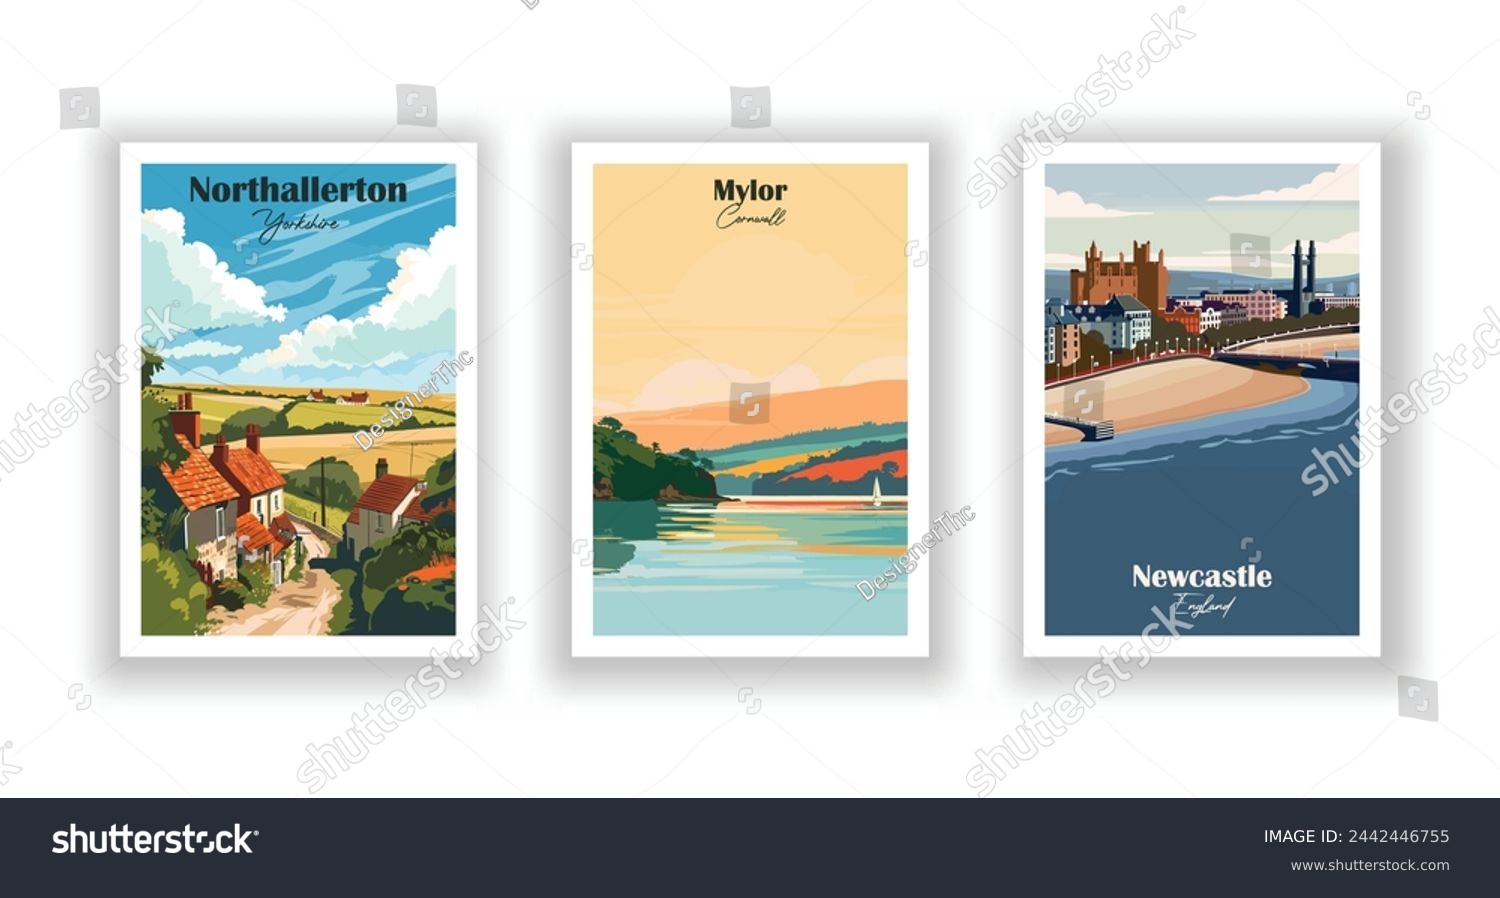 SVG of Mylor, Cornwall. Newcastle, England. Northallerton, Yorkshire - Set of 3 Vintage Travel Posters. Vector illustration. High Quality Prints svg